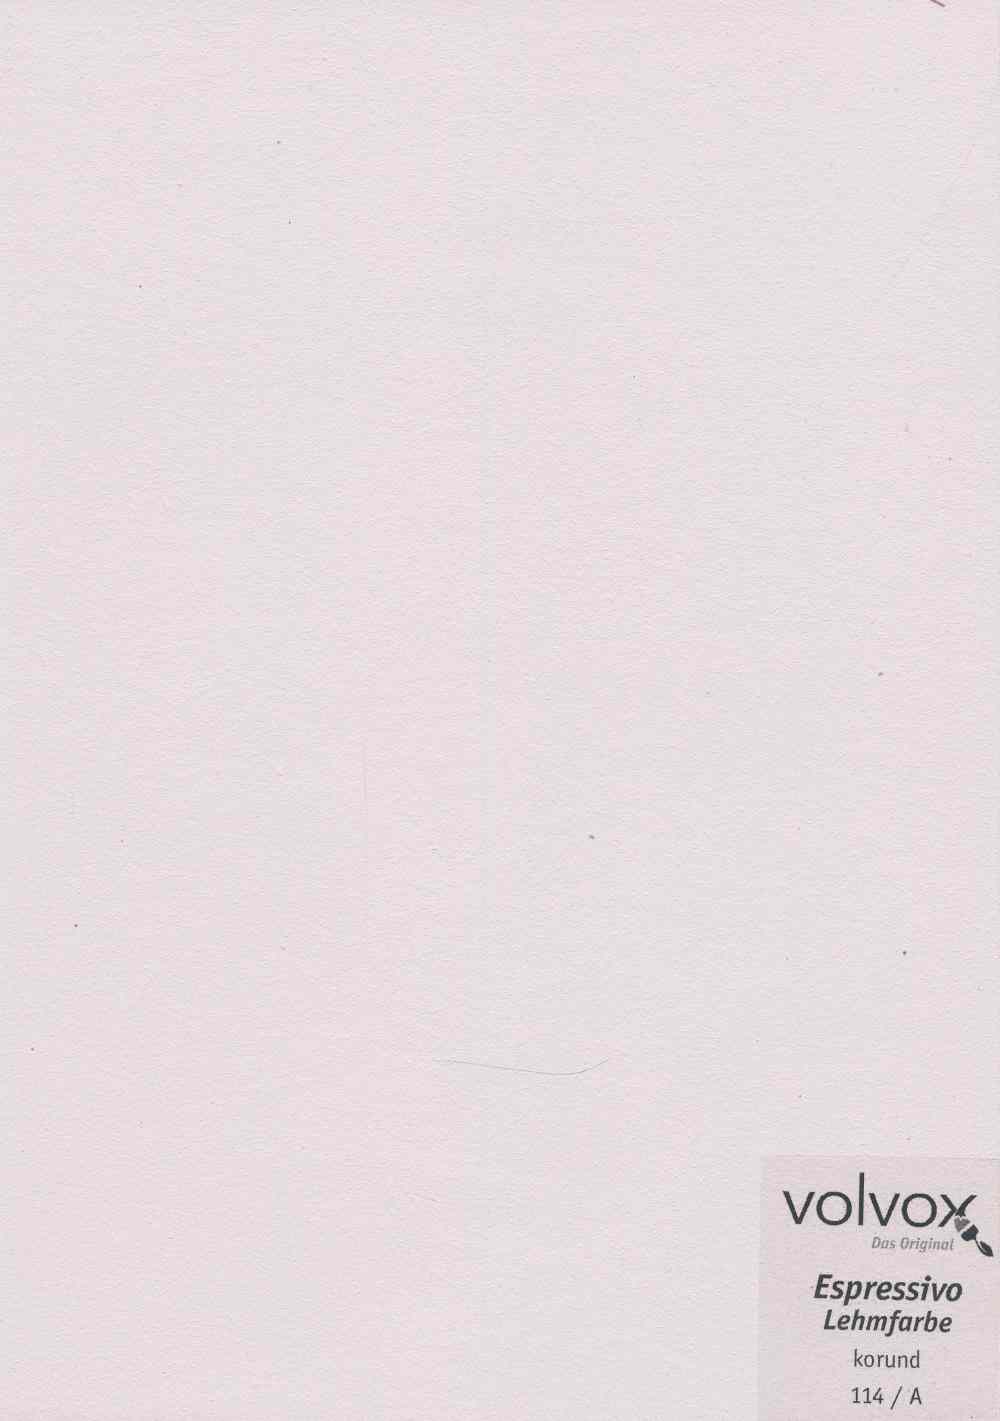 Volvox Espressivo Lehmfarbe 114 korund 